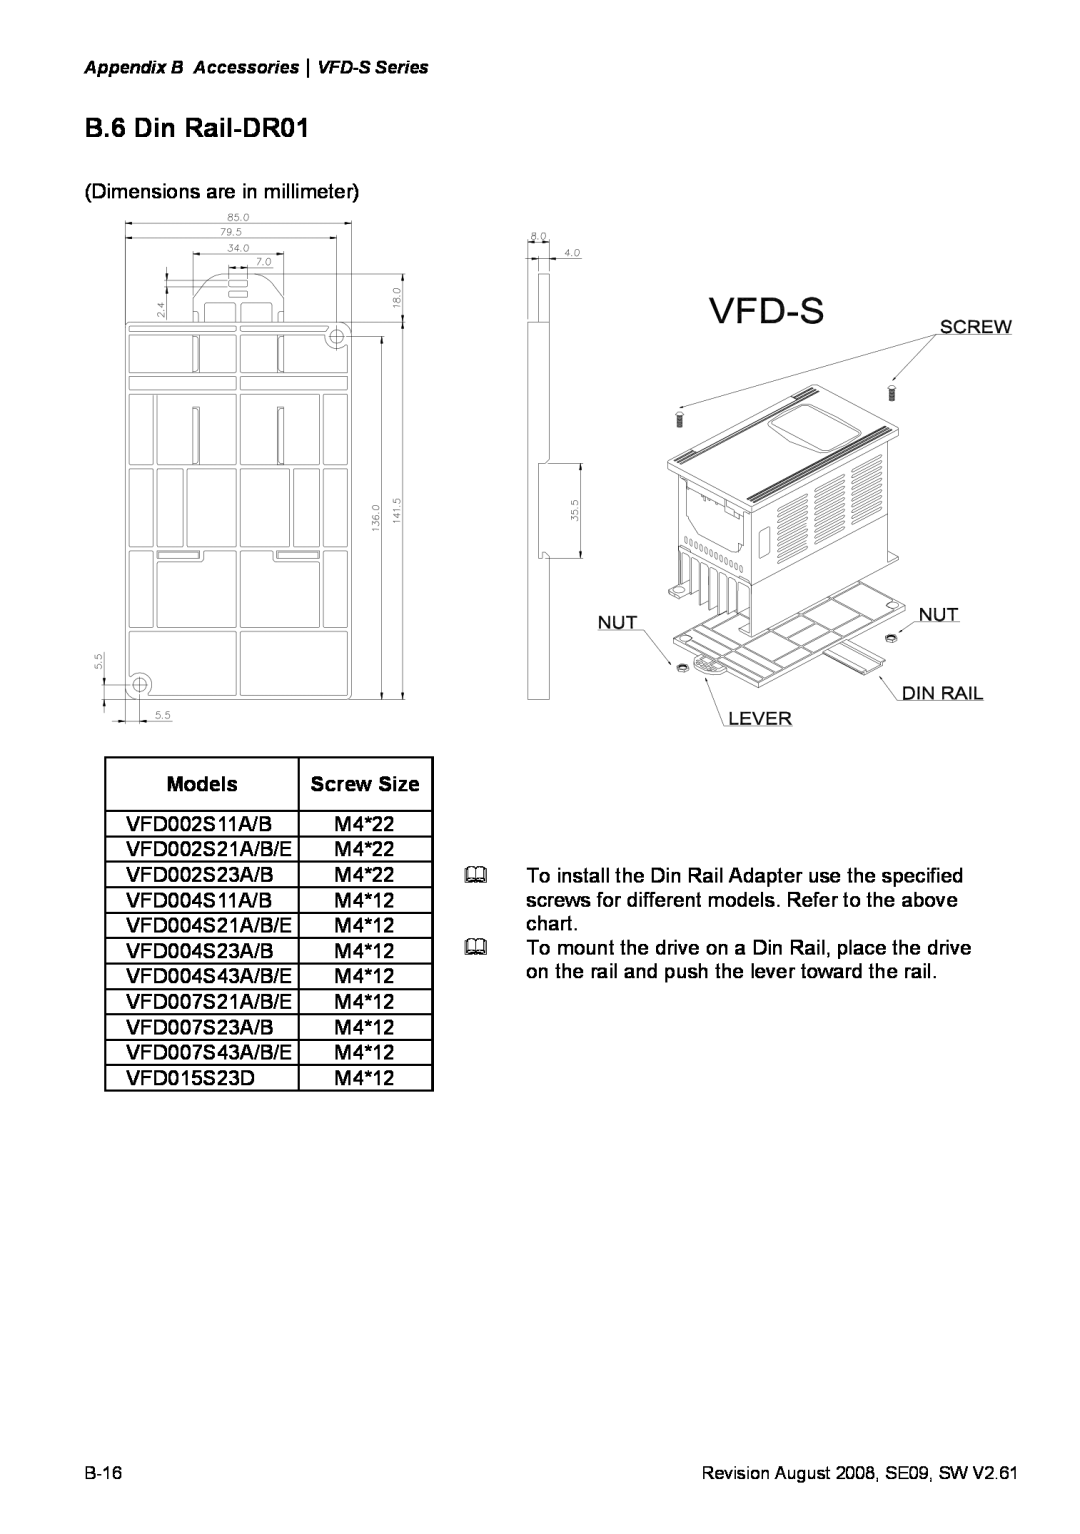 Delta Electronics VFD-S manual B.6 Din Rail-DR01, Models, Screw Size 